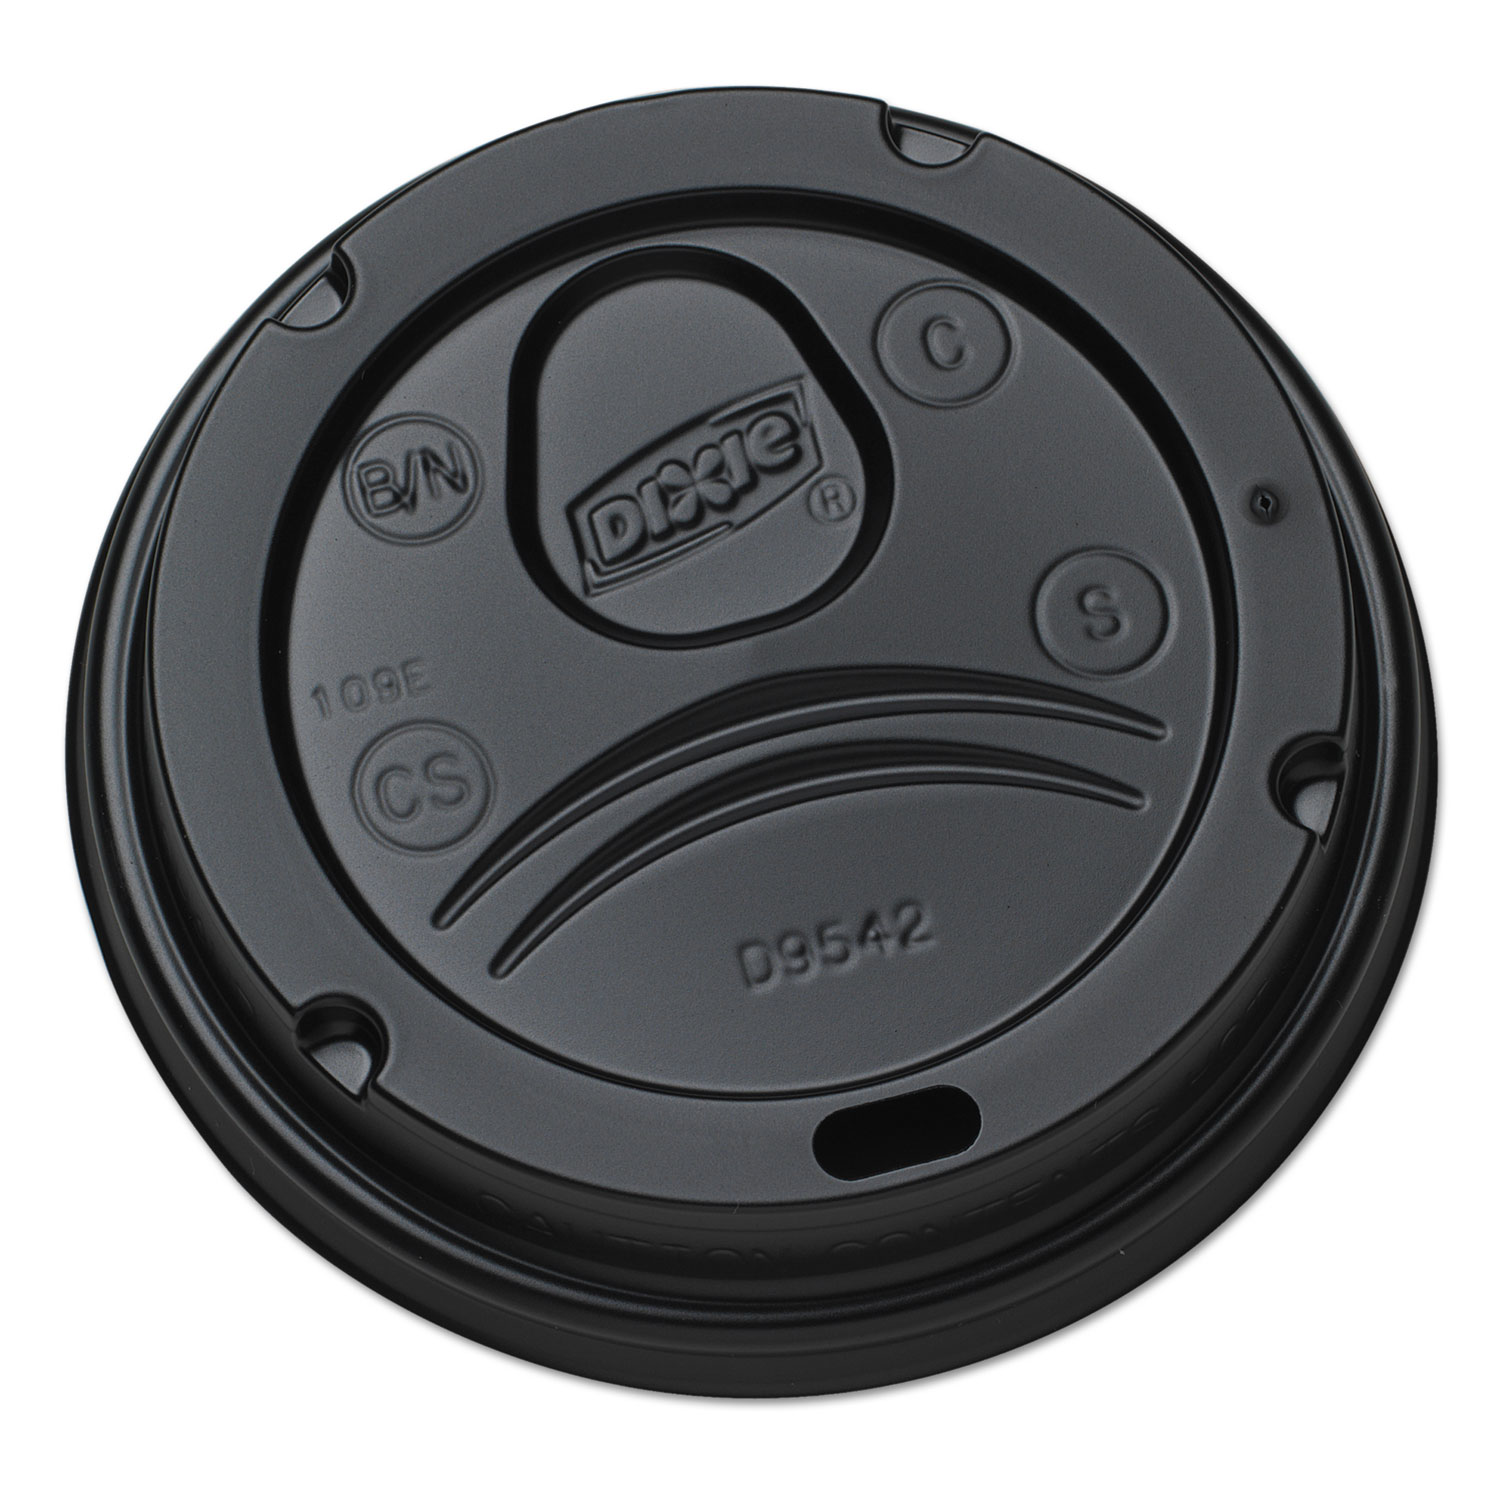  Dixie D9542B Drink-Thru Lids for 10-20 oz Cups, Plastic, Black (DXED9542B) 